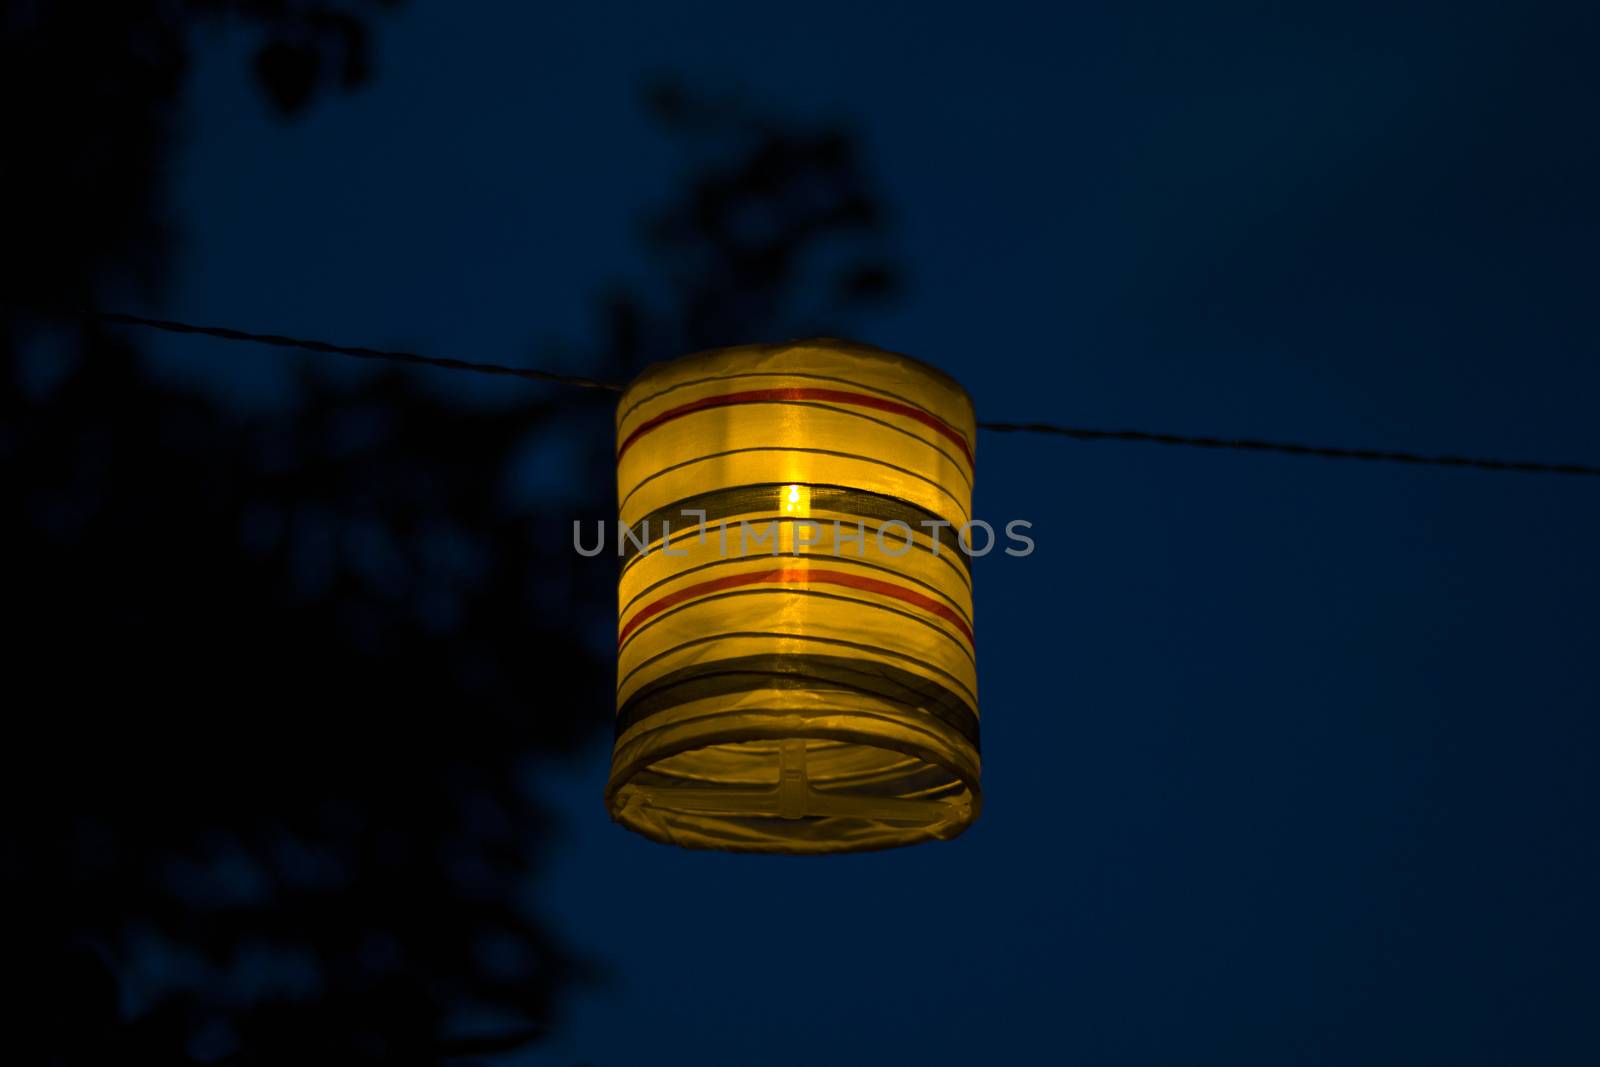 Lantern in the yard, night and warm light, hanging lanterns by Taidundua